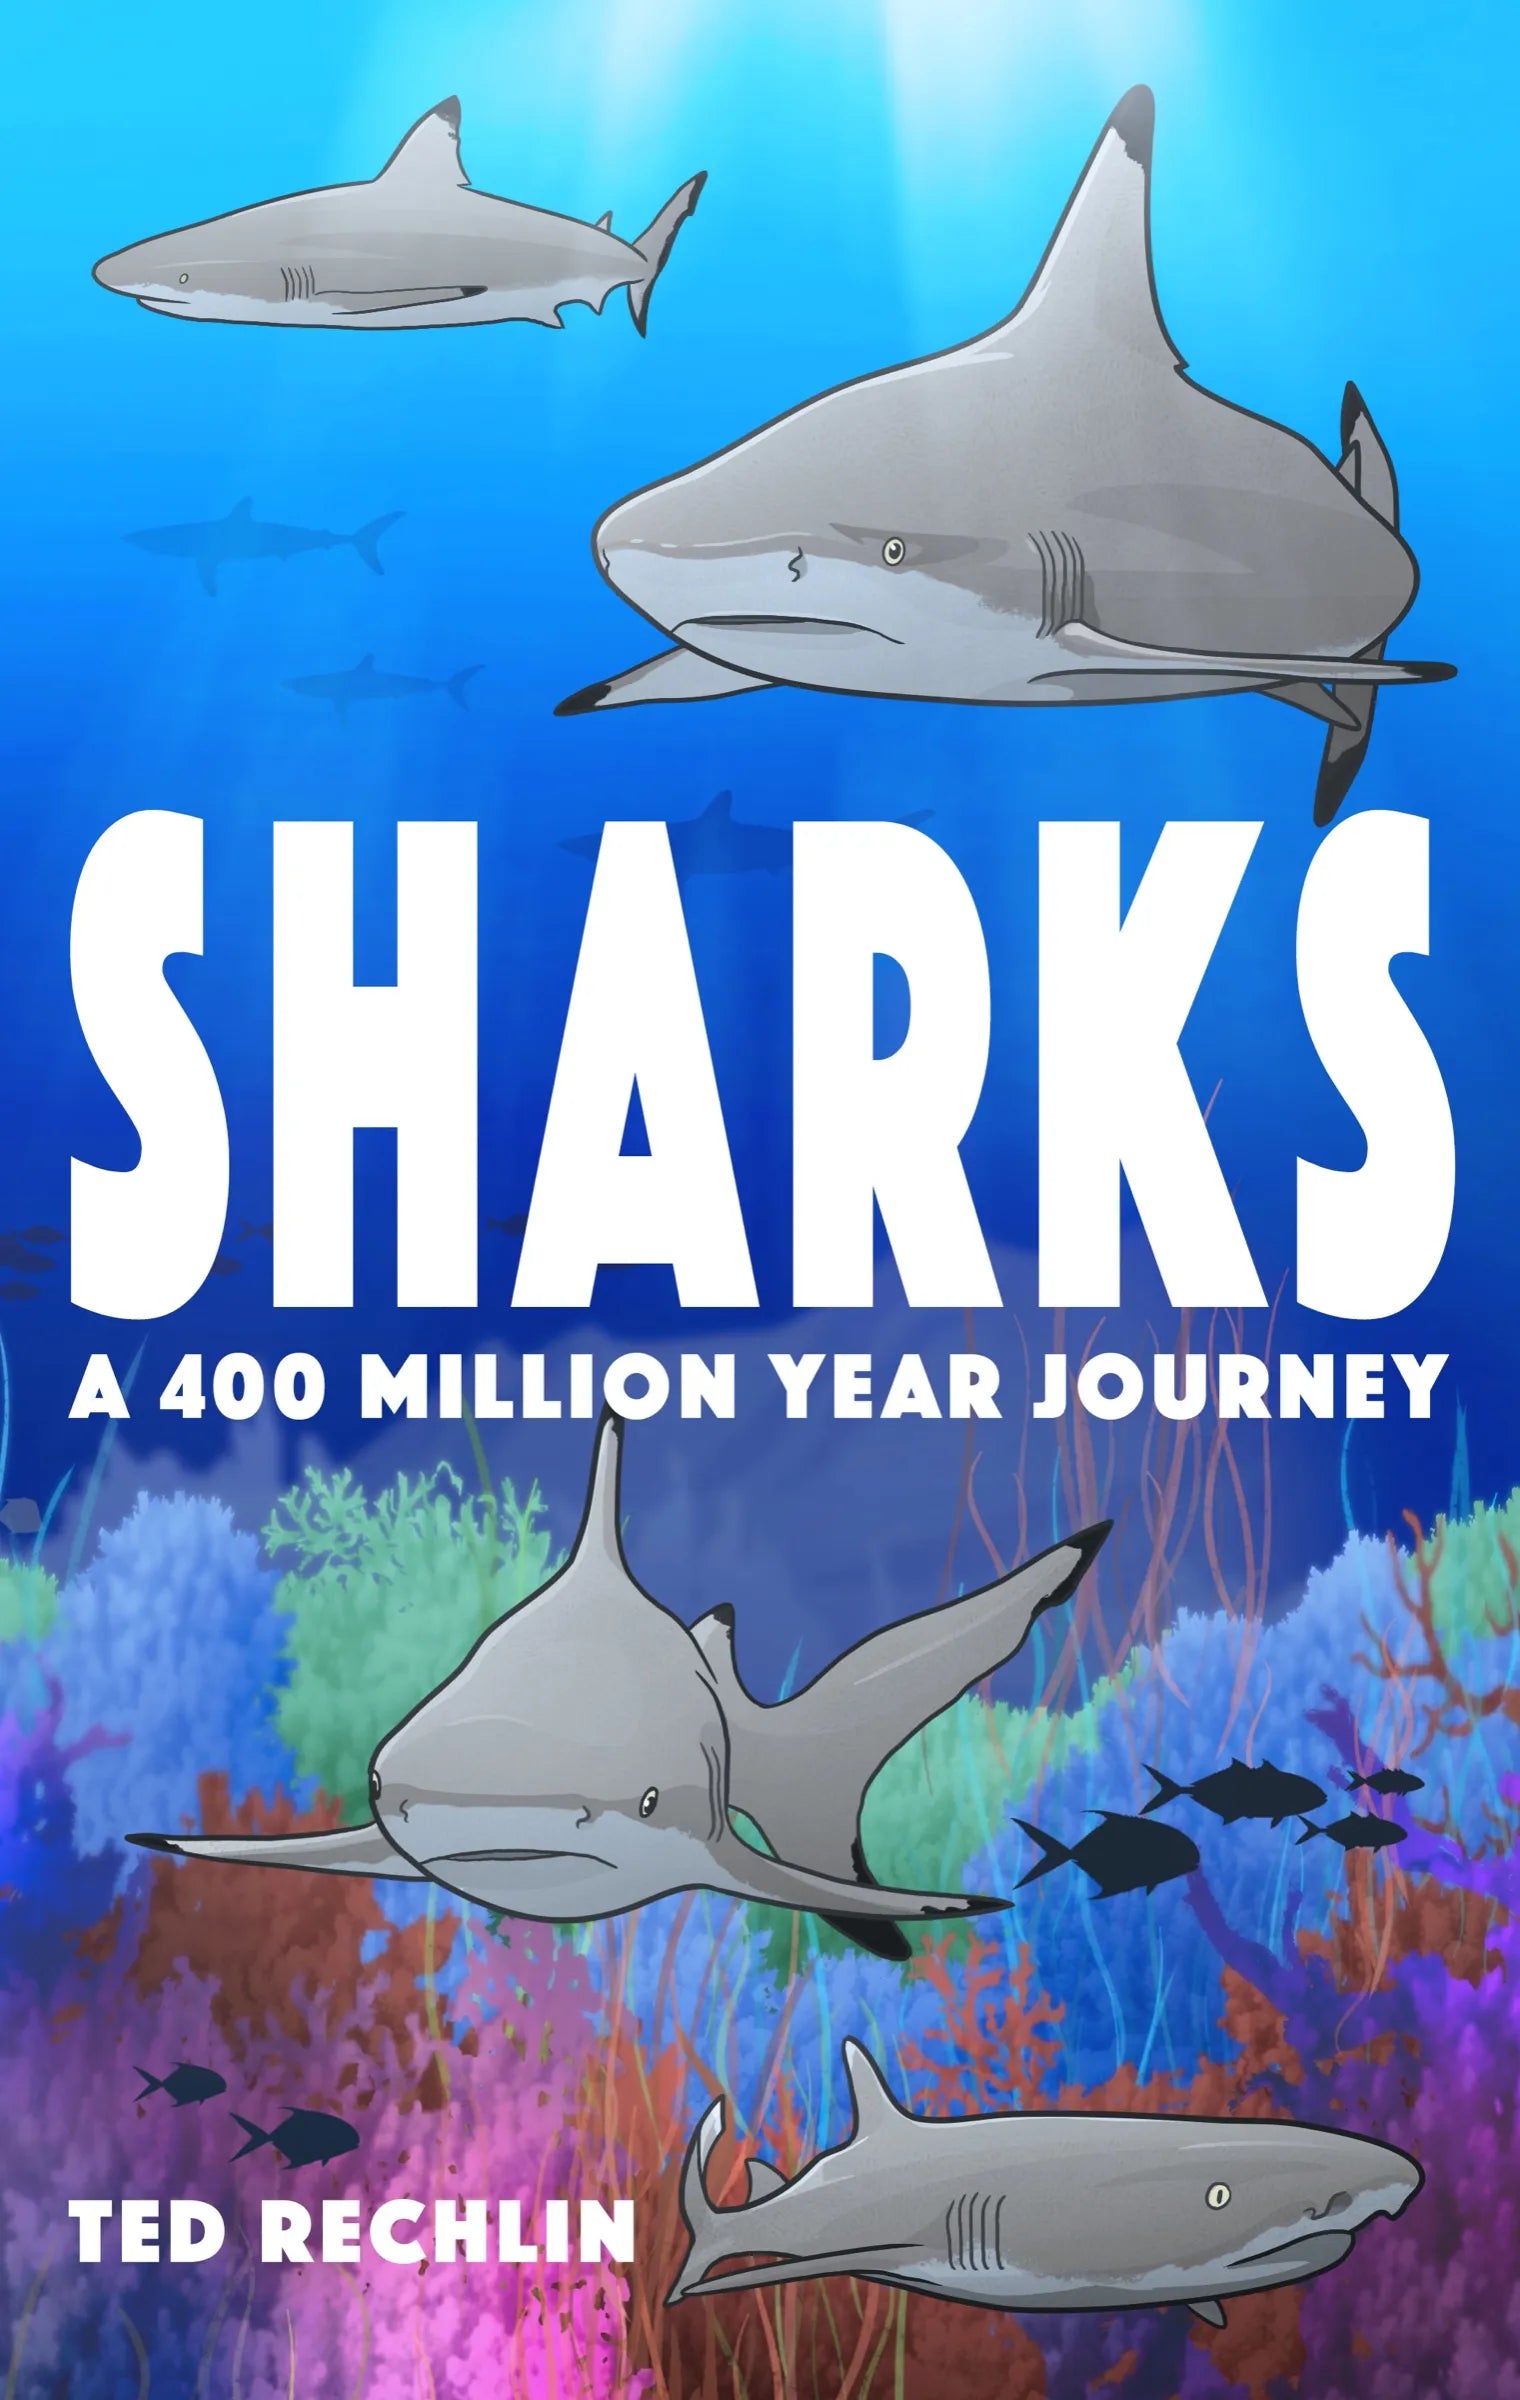 Sharks Book: A 400 Million Year Journey